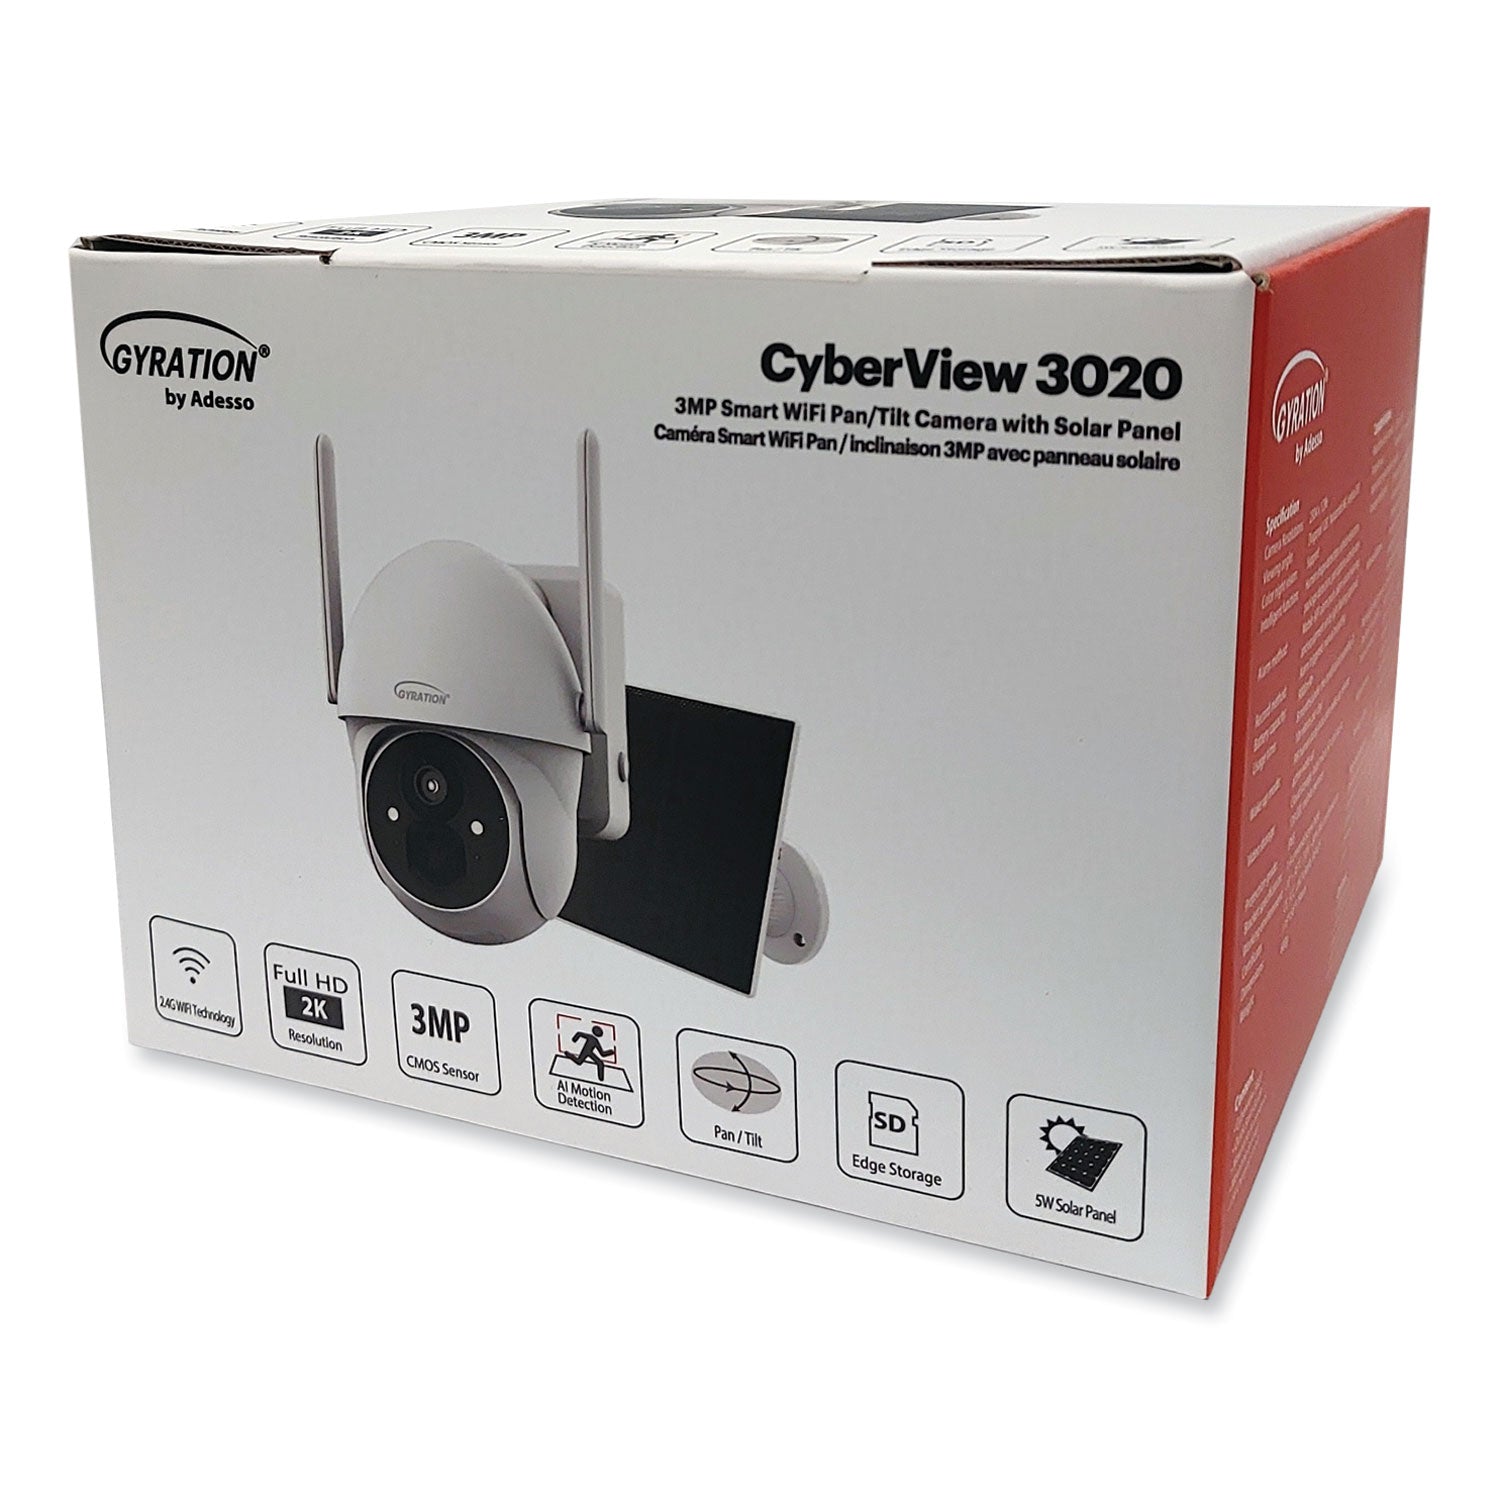 cyberview-3020-3mp-smart-wifi-pan-tilt-camera-with-solar-panel-2304-x-1296-pixels_adecybrview3020 - 3